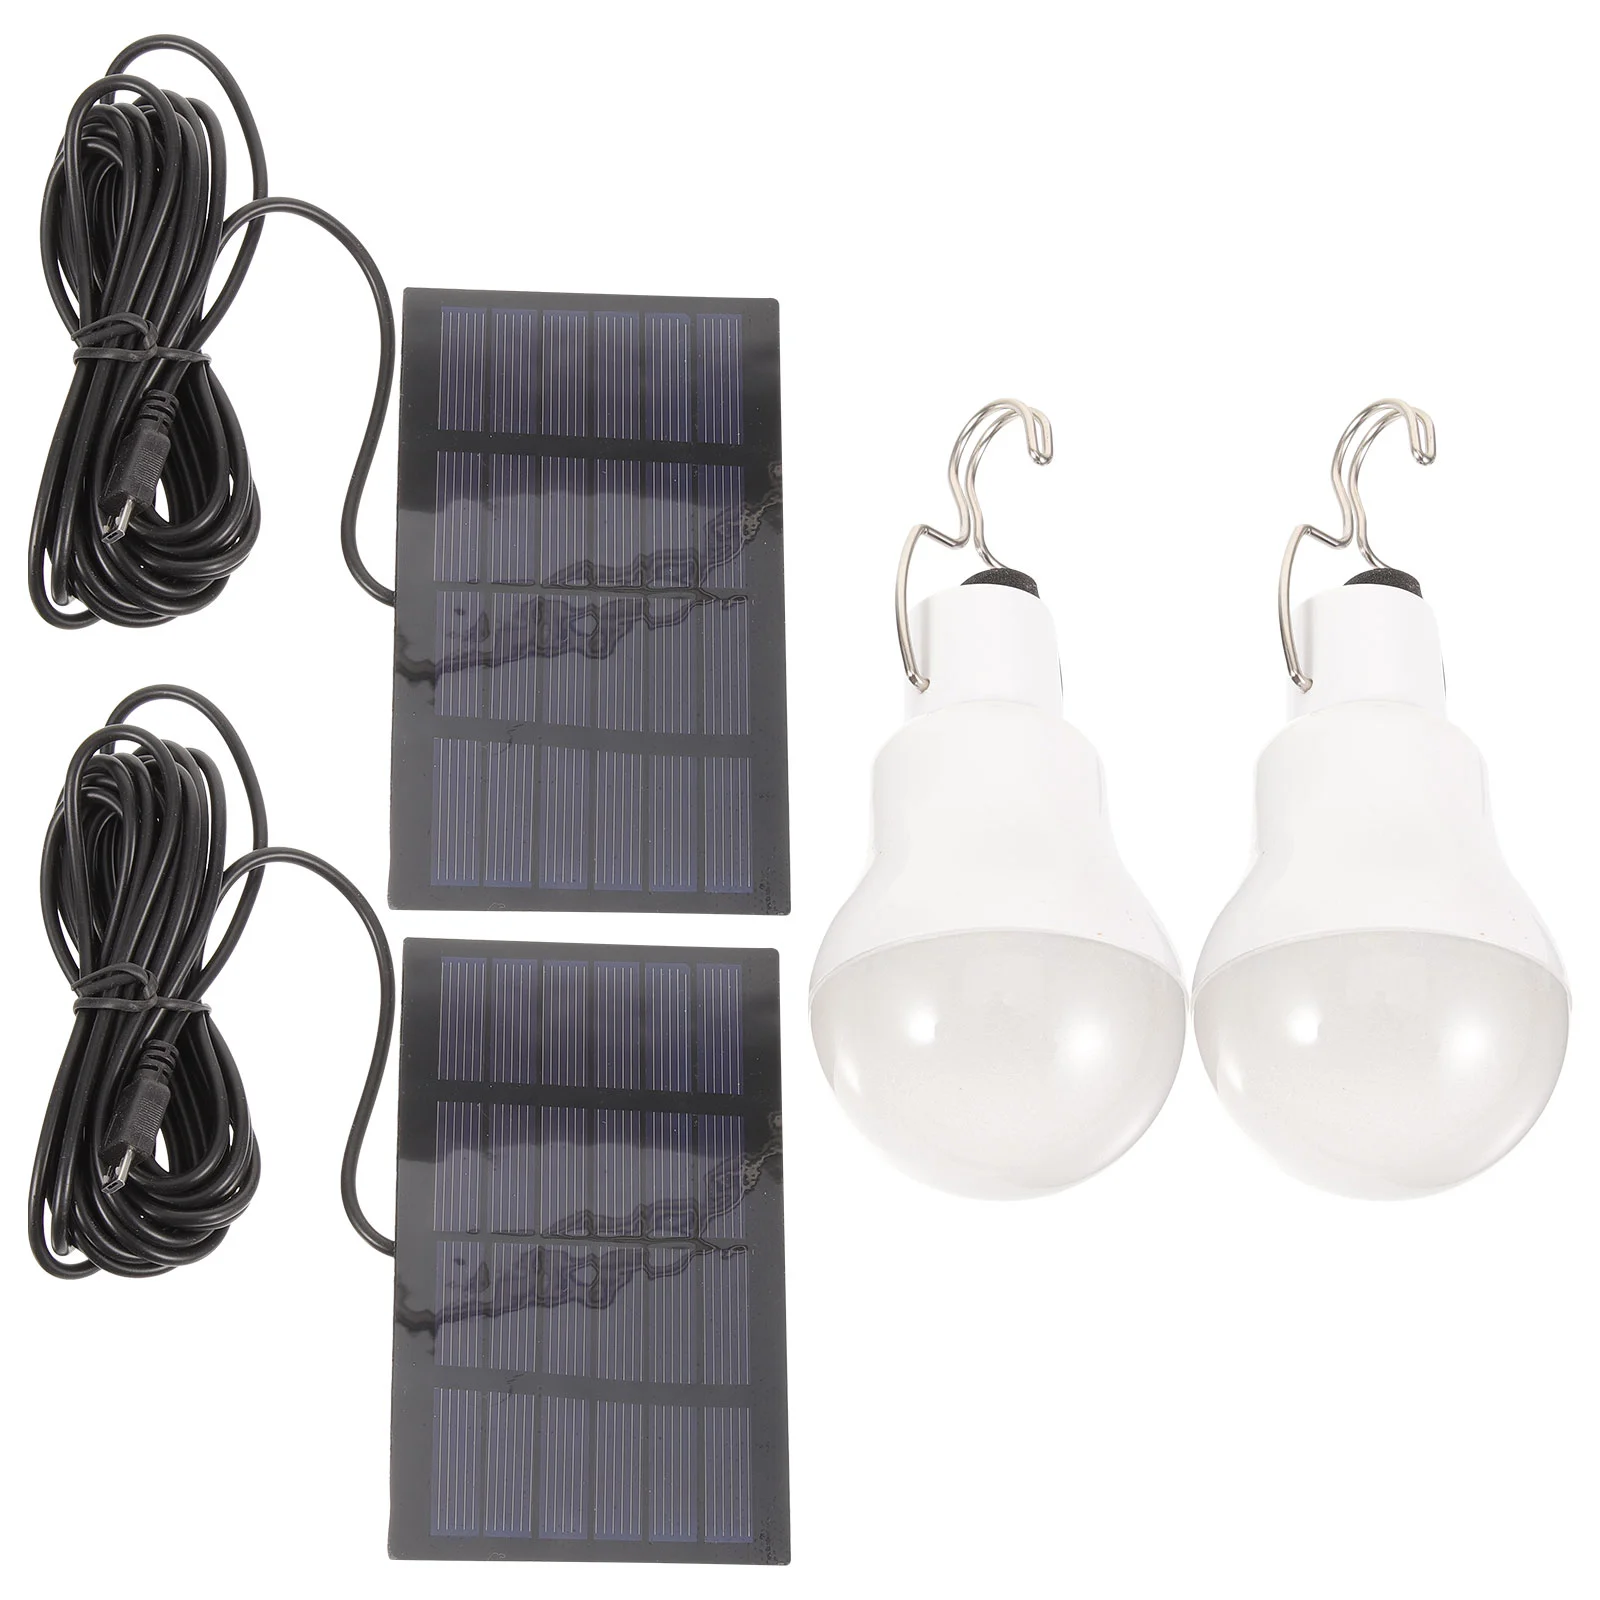 

Фонари для фонарей, лампы на солнечных батареях, уличный комплект для кемпинга, лампа для курятника